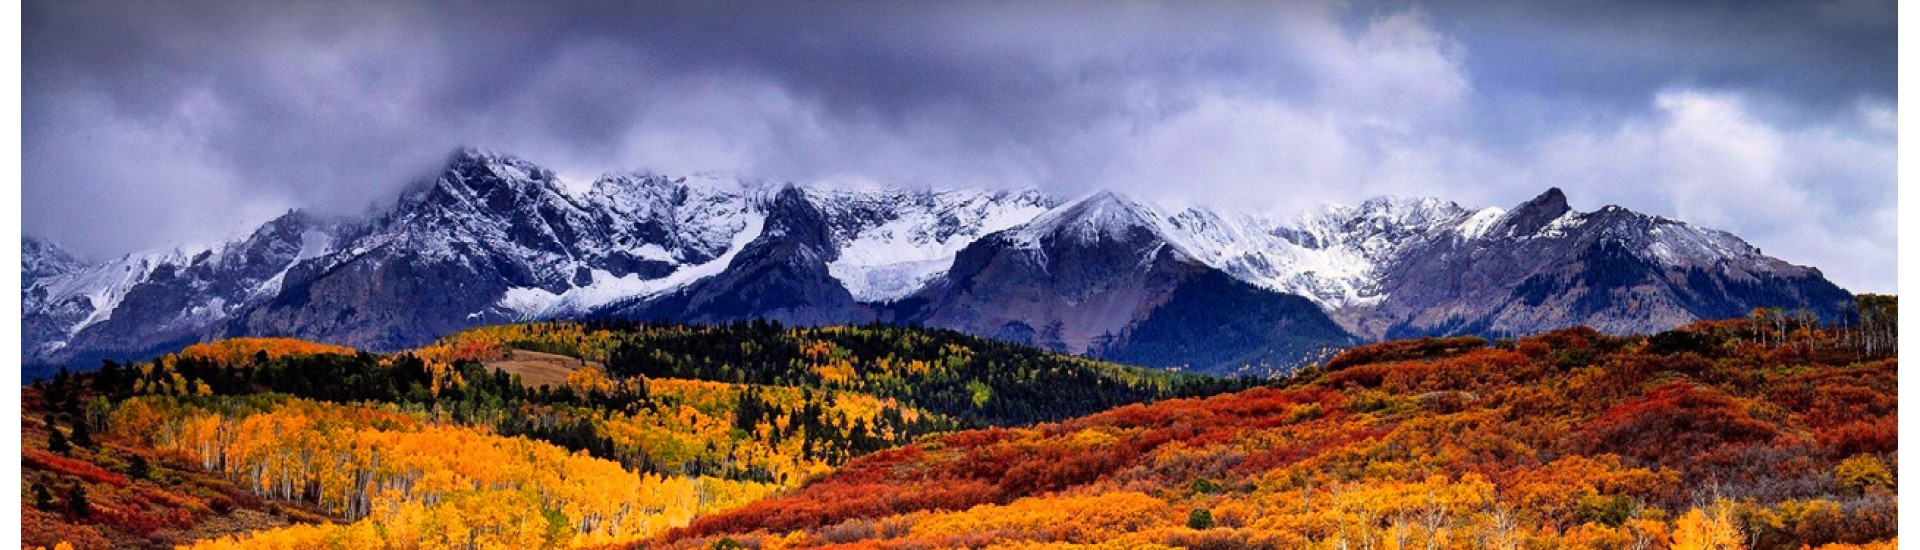 autumn-mountains-sky-nature-landscape-website-header-1920x550